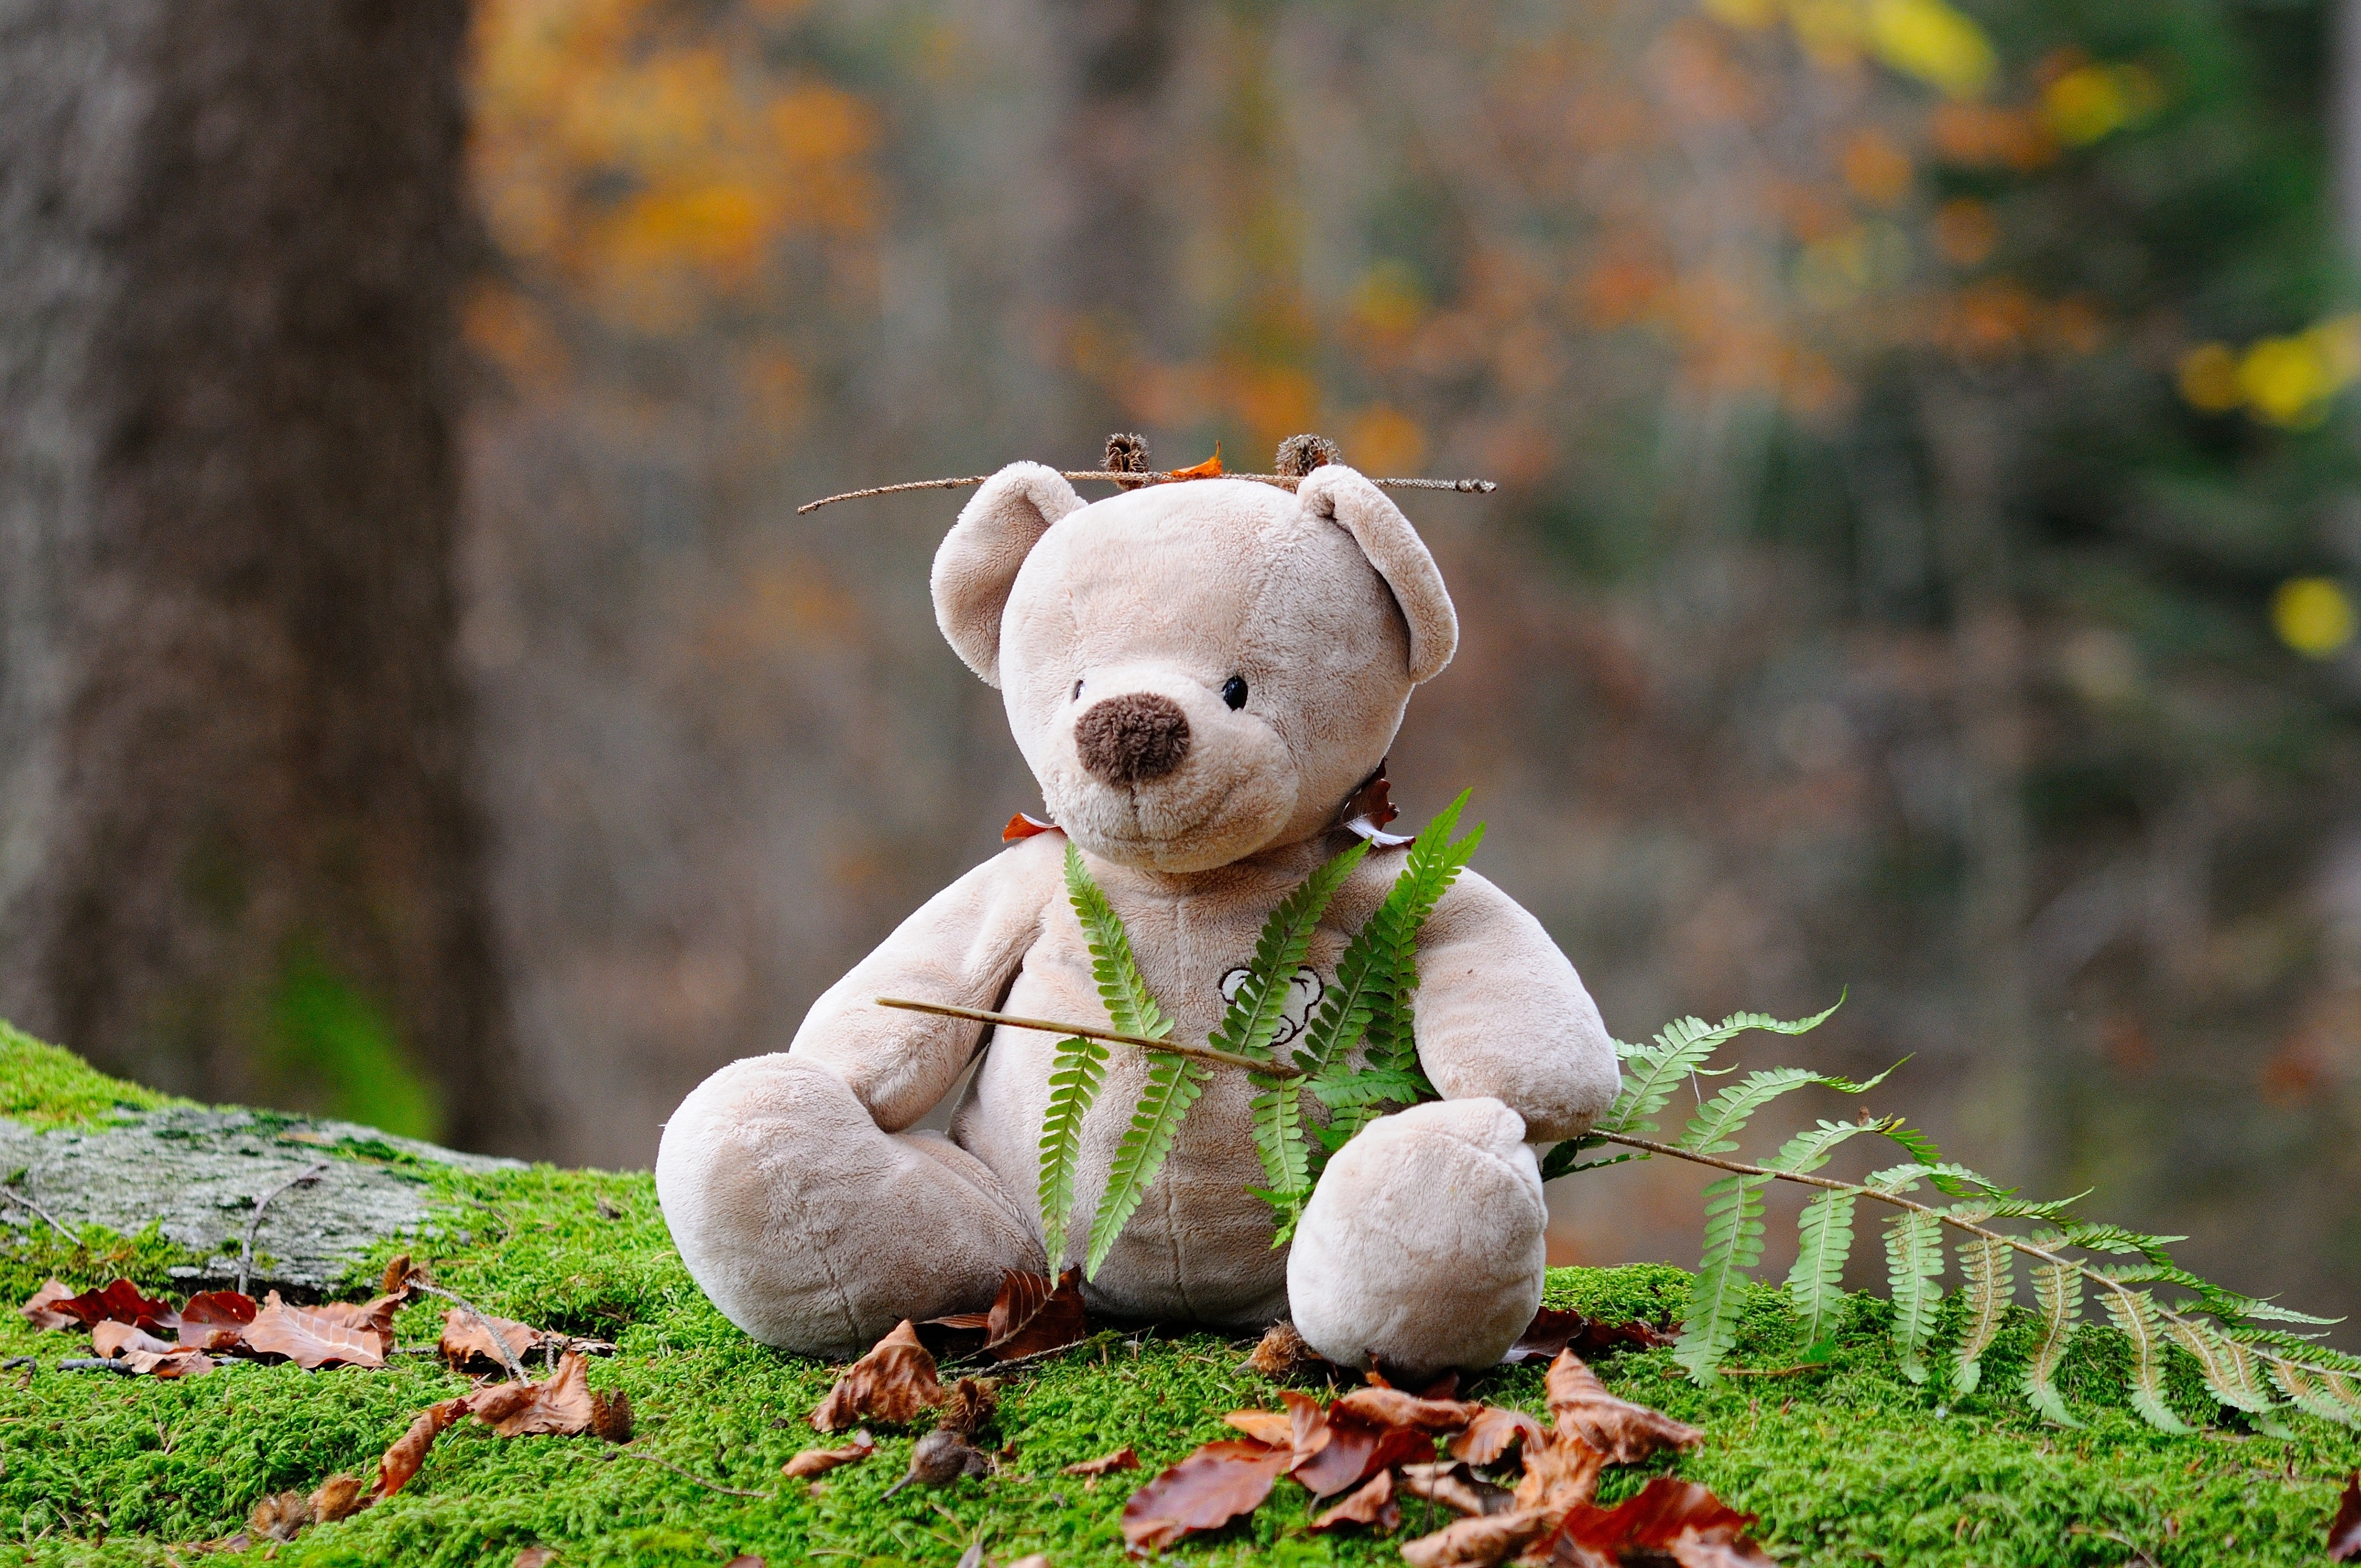 Gray bear plush toy on green grass during daytime photo